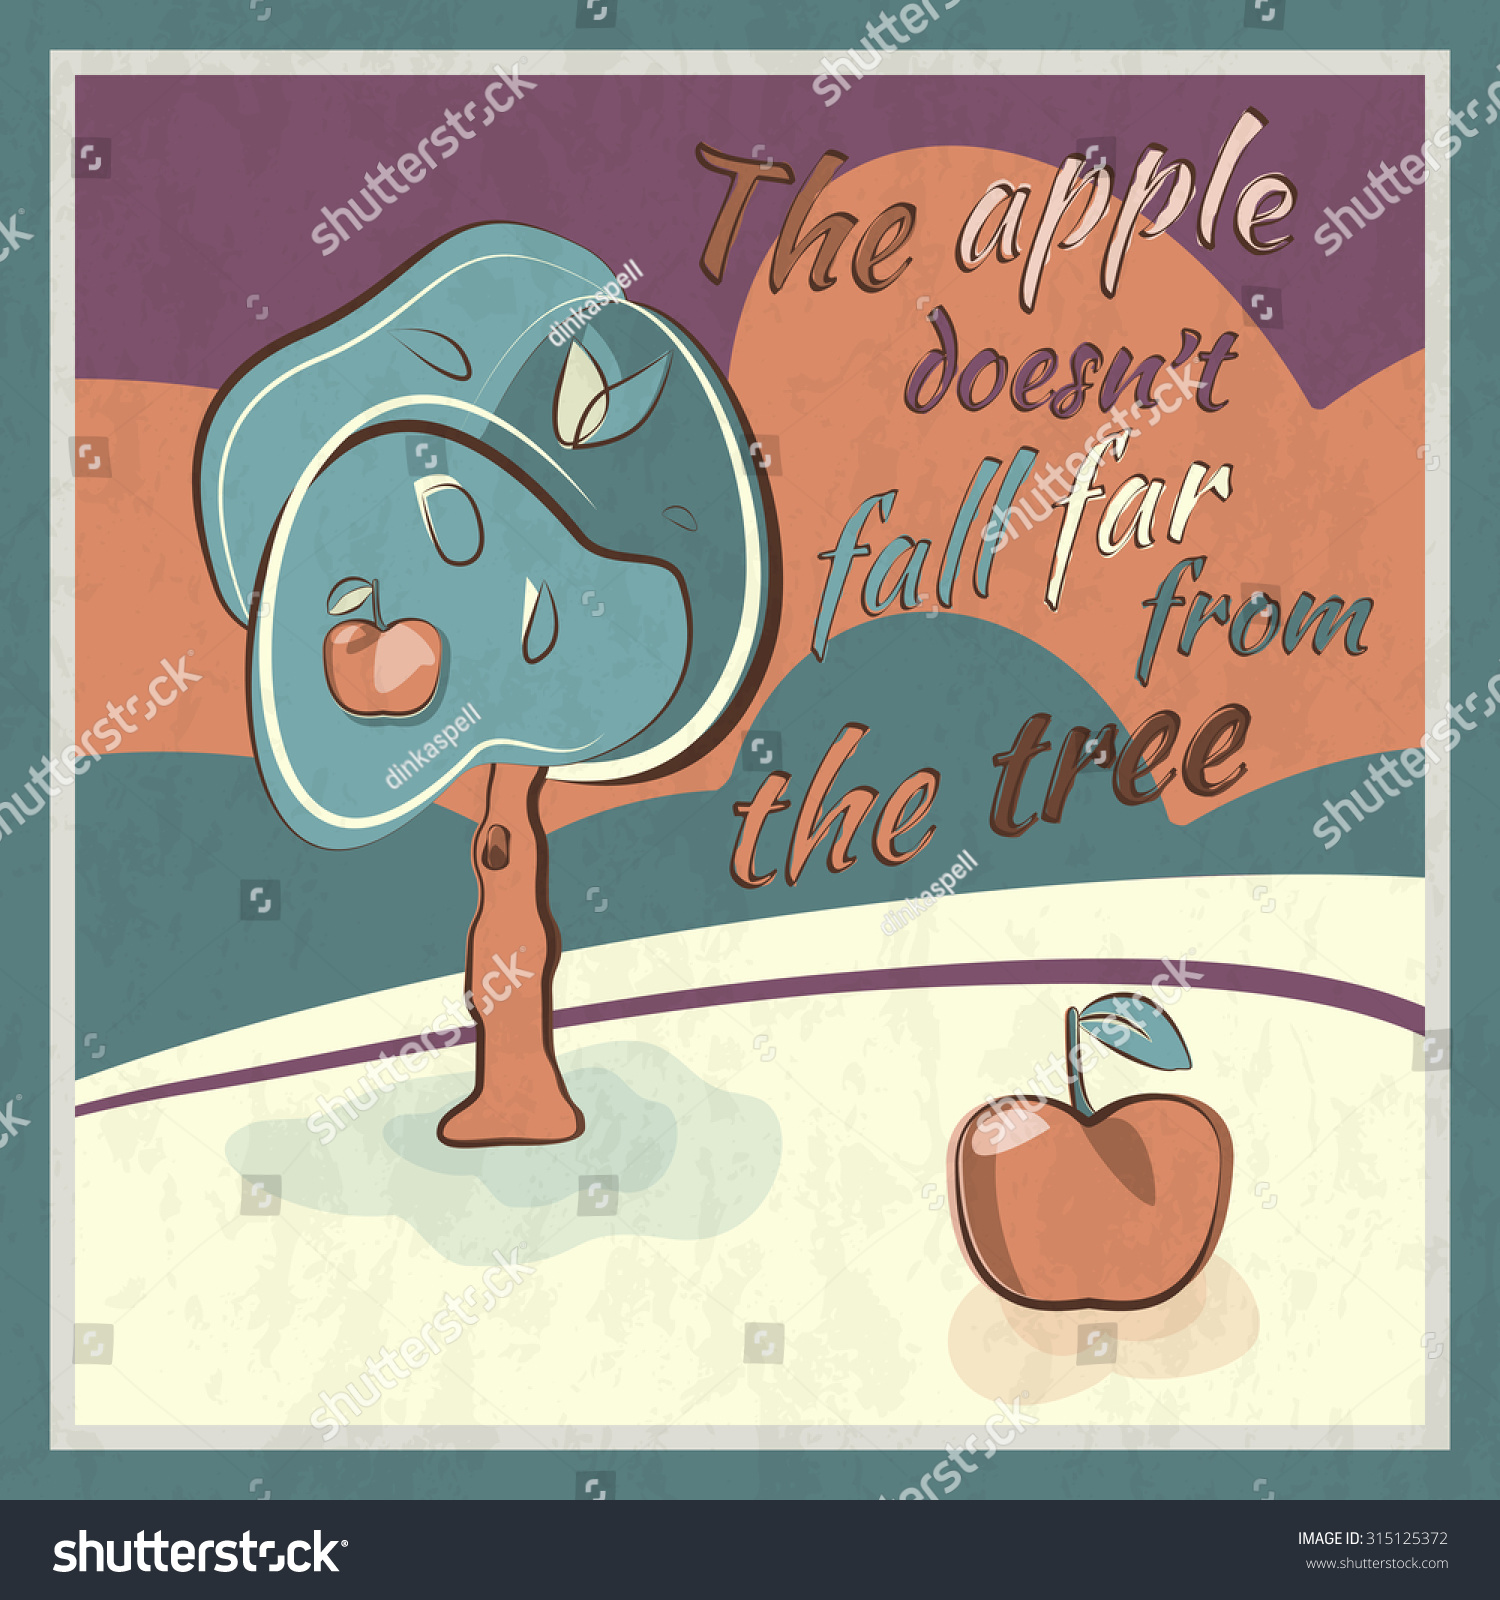 Fell far. The Apple doesn’t Fall far from the Tree. Идиома the Apple never Falls far from the Tree. The Apple doesn't Fall. Idiom an Apple doesn't Fall far from the Tree.